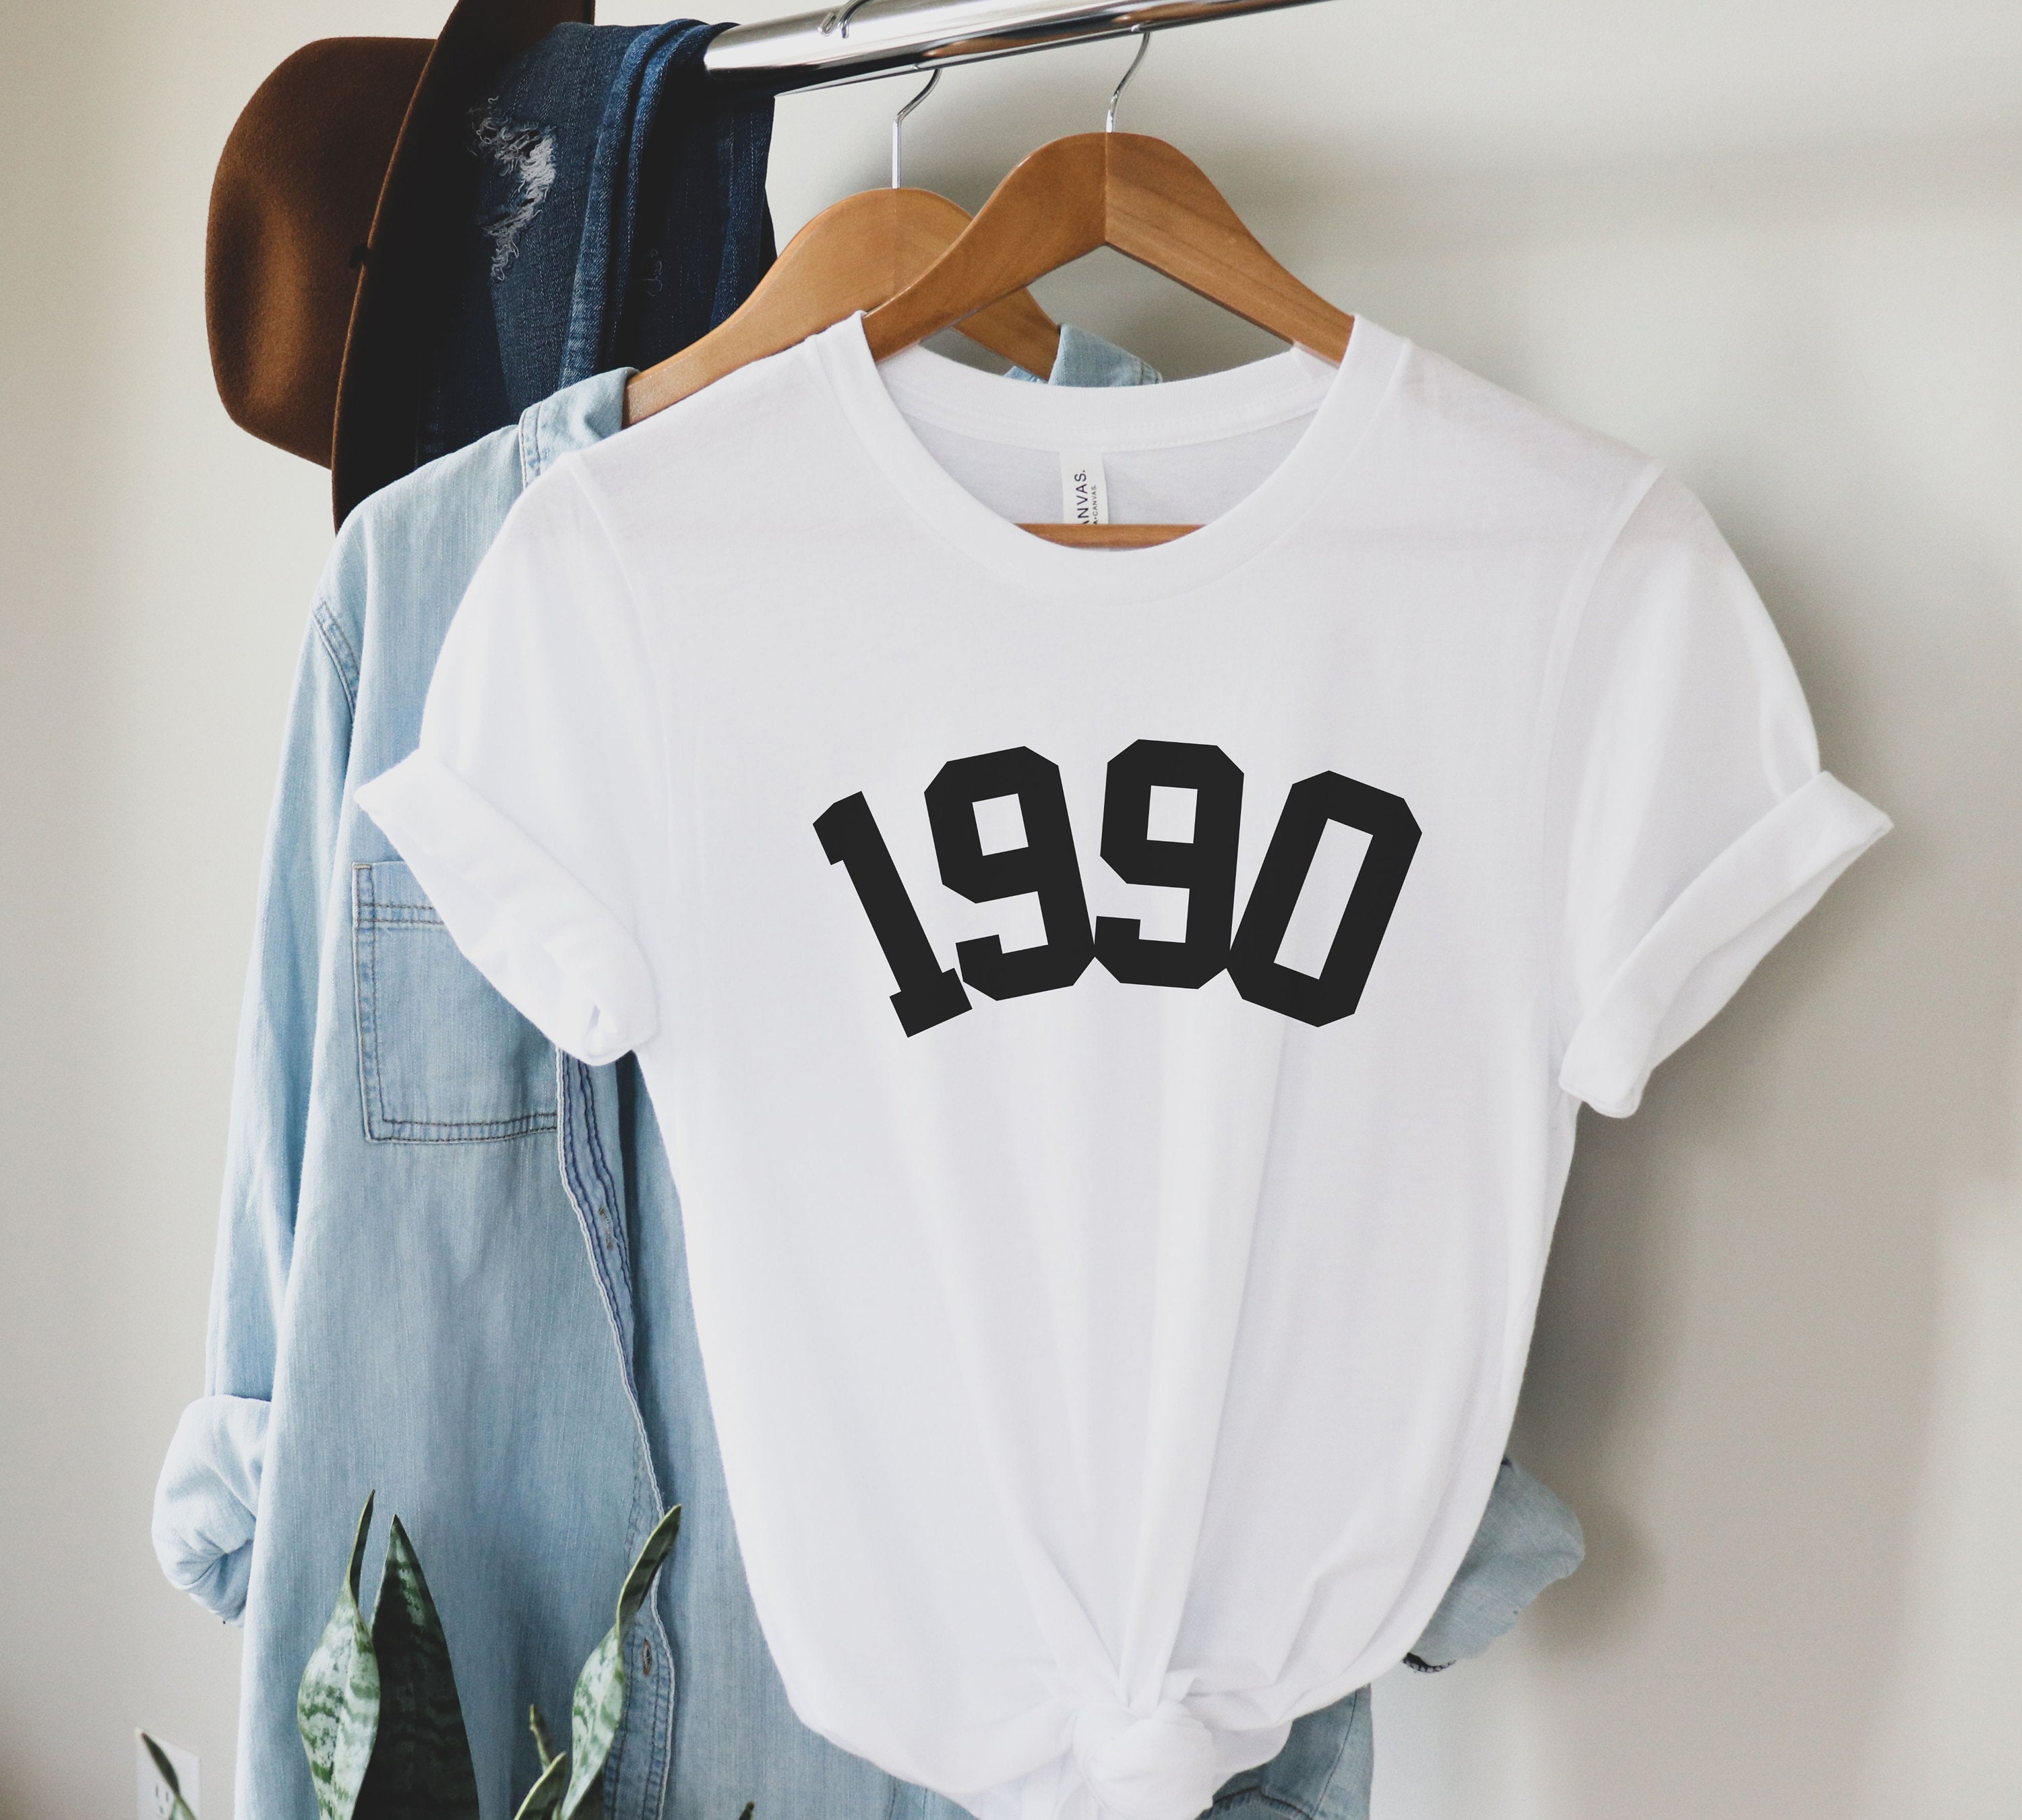 1990 T Shirt Etsy